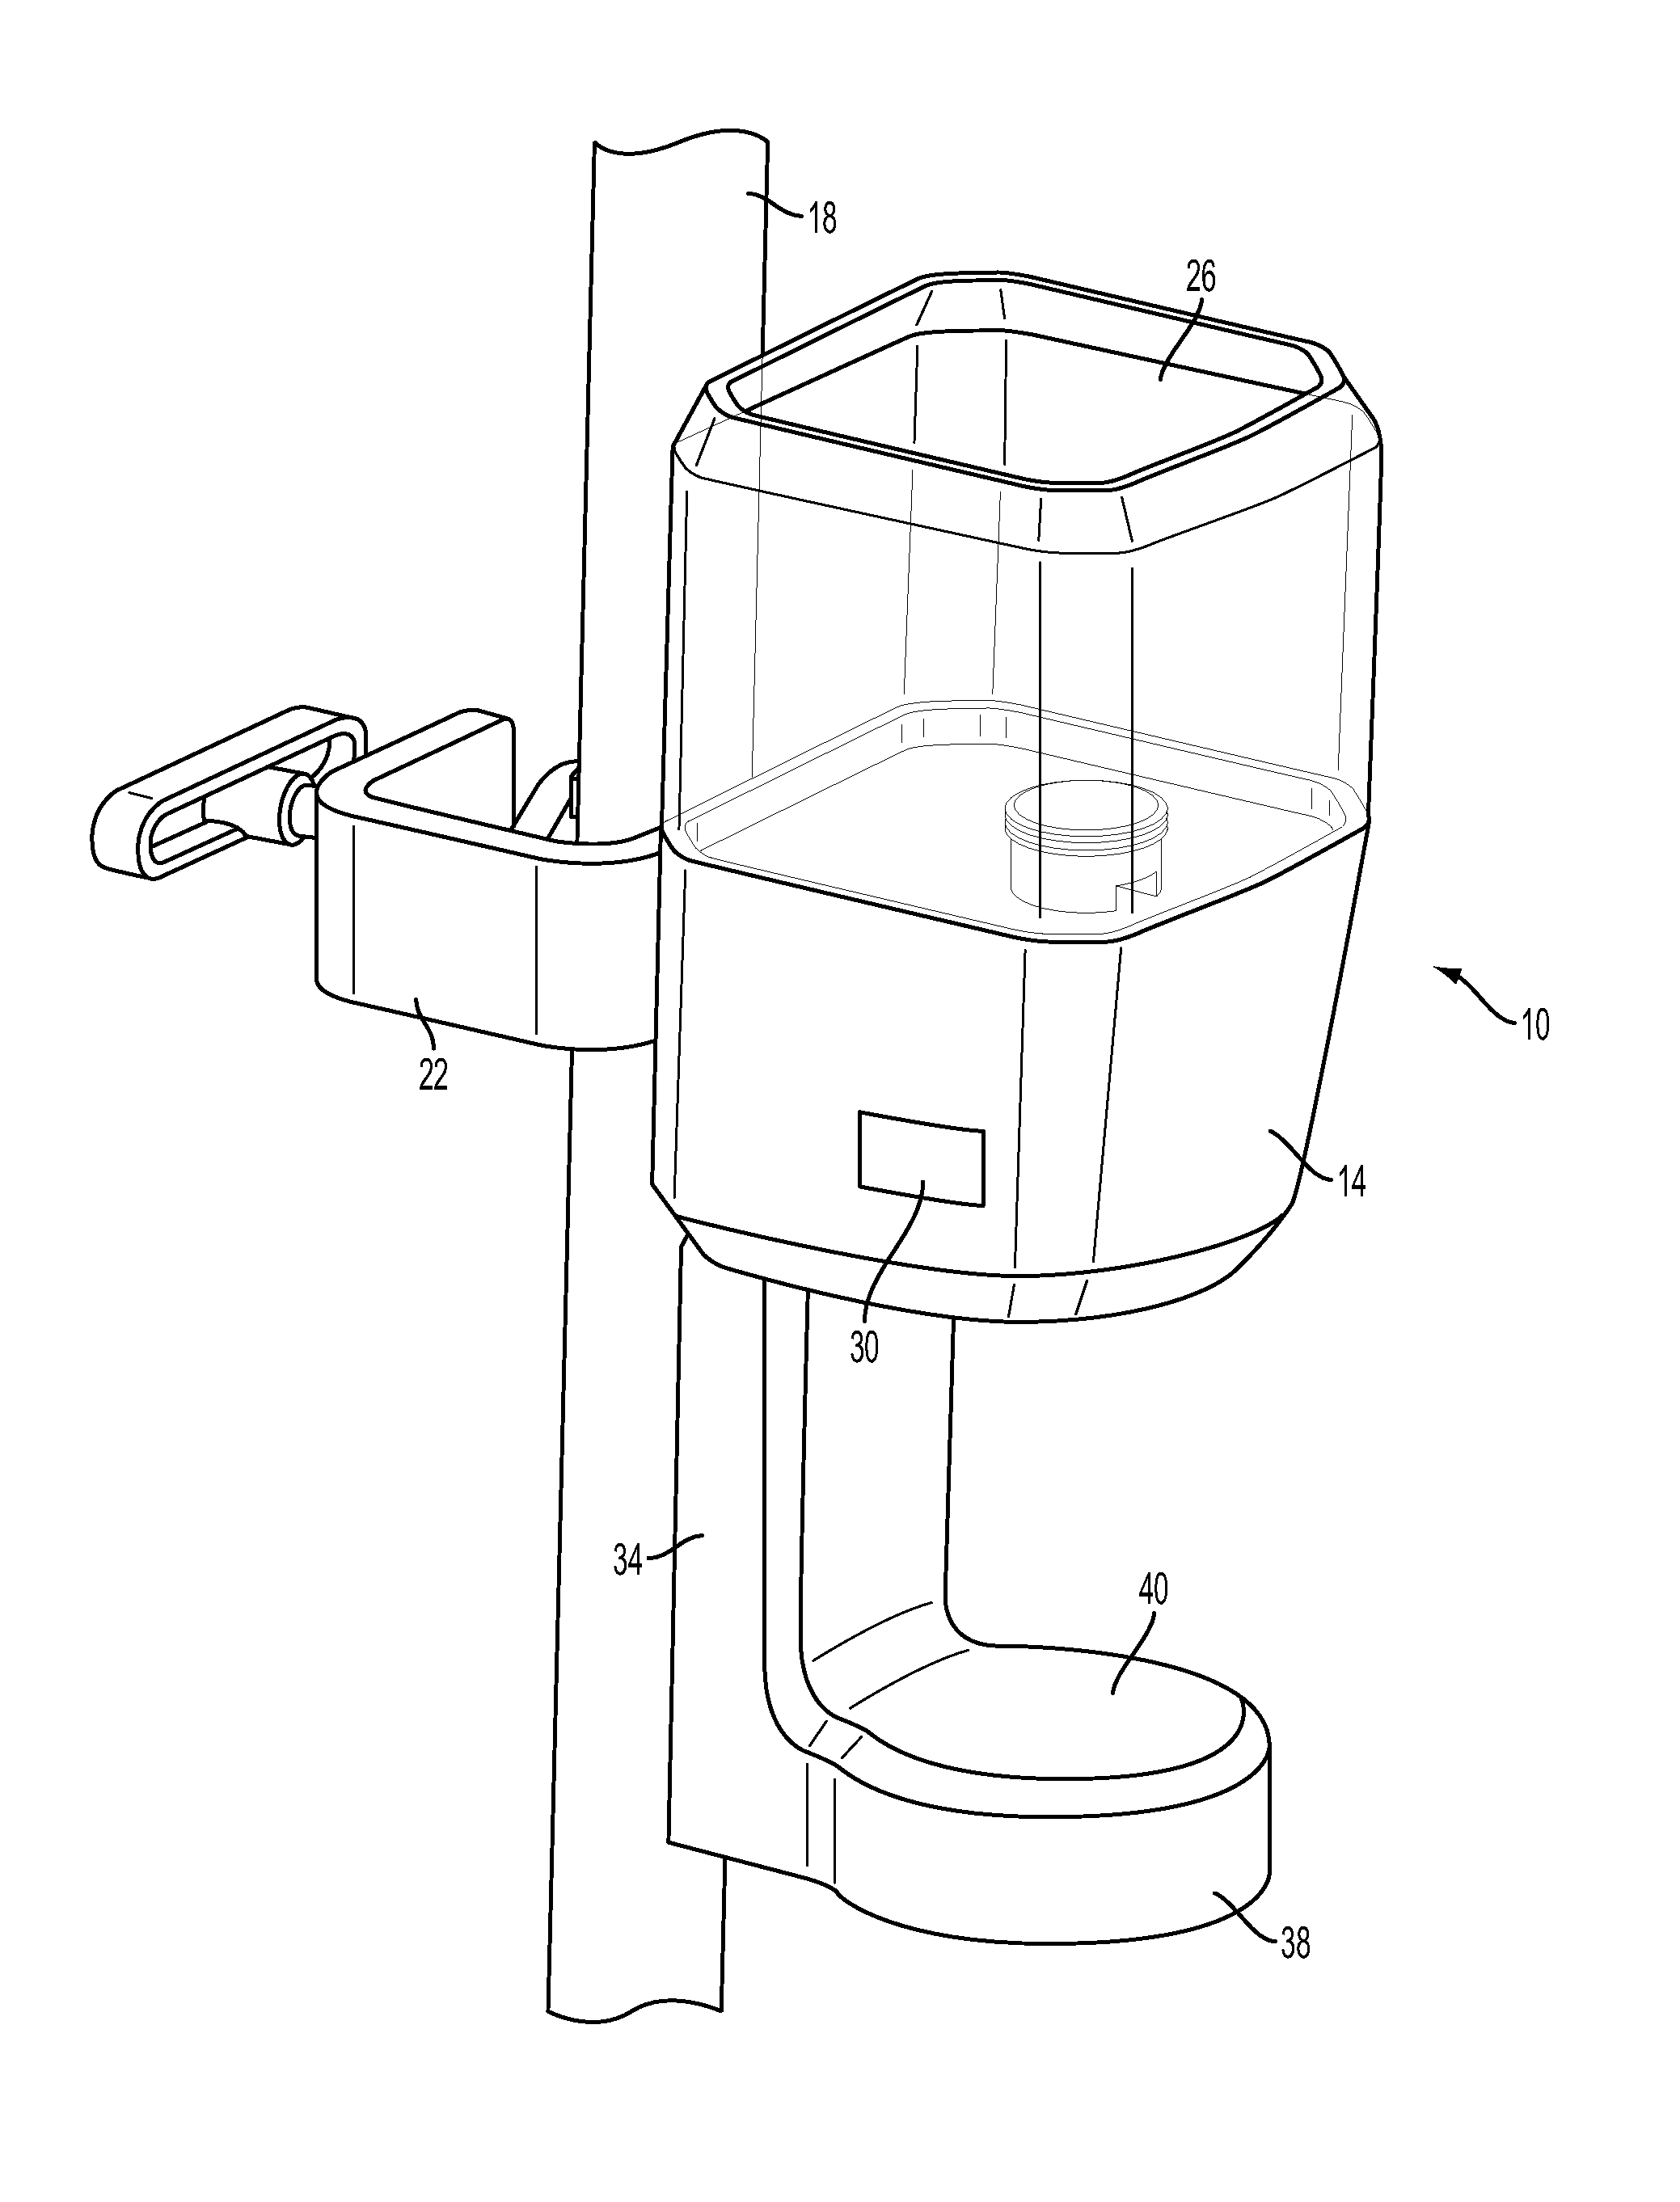 Modular point of care dispenser system